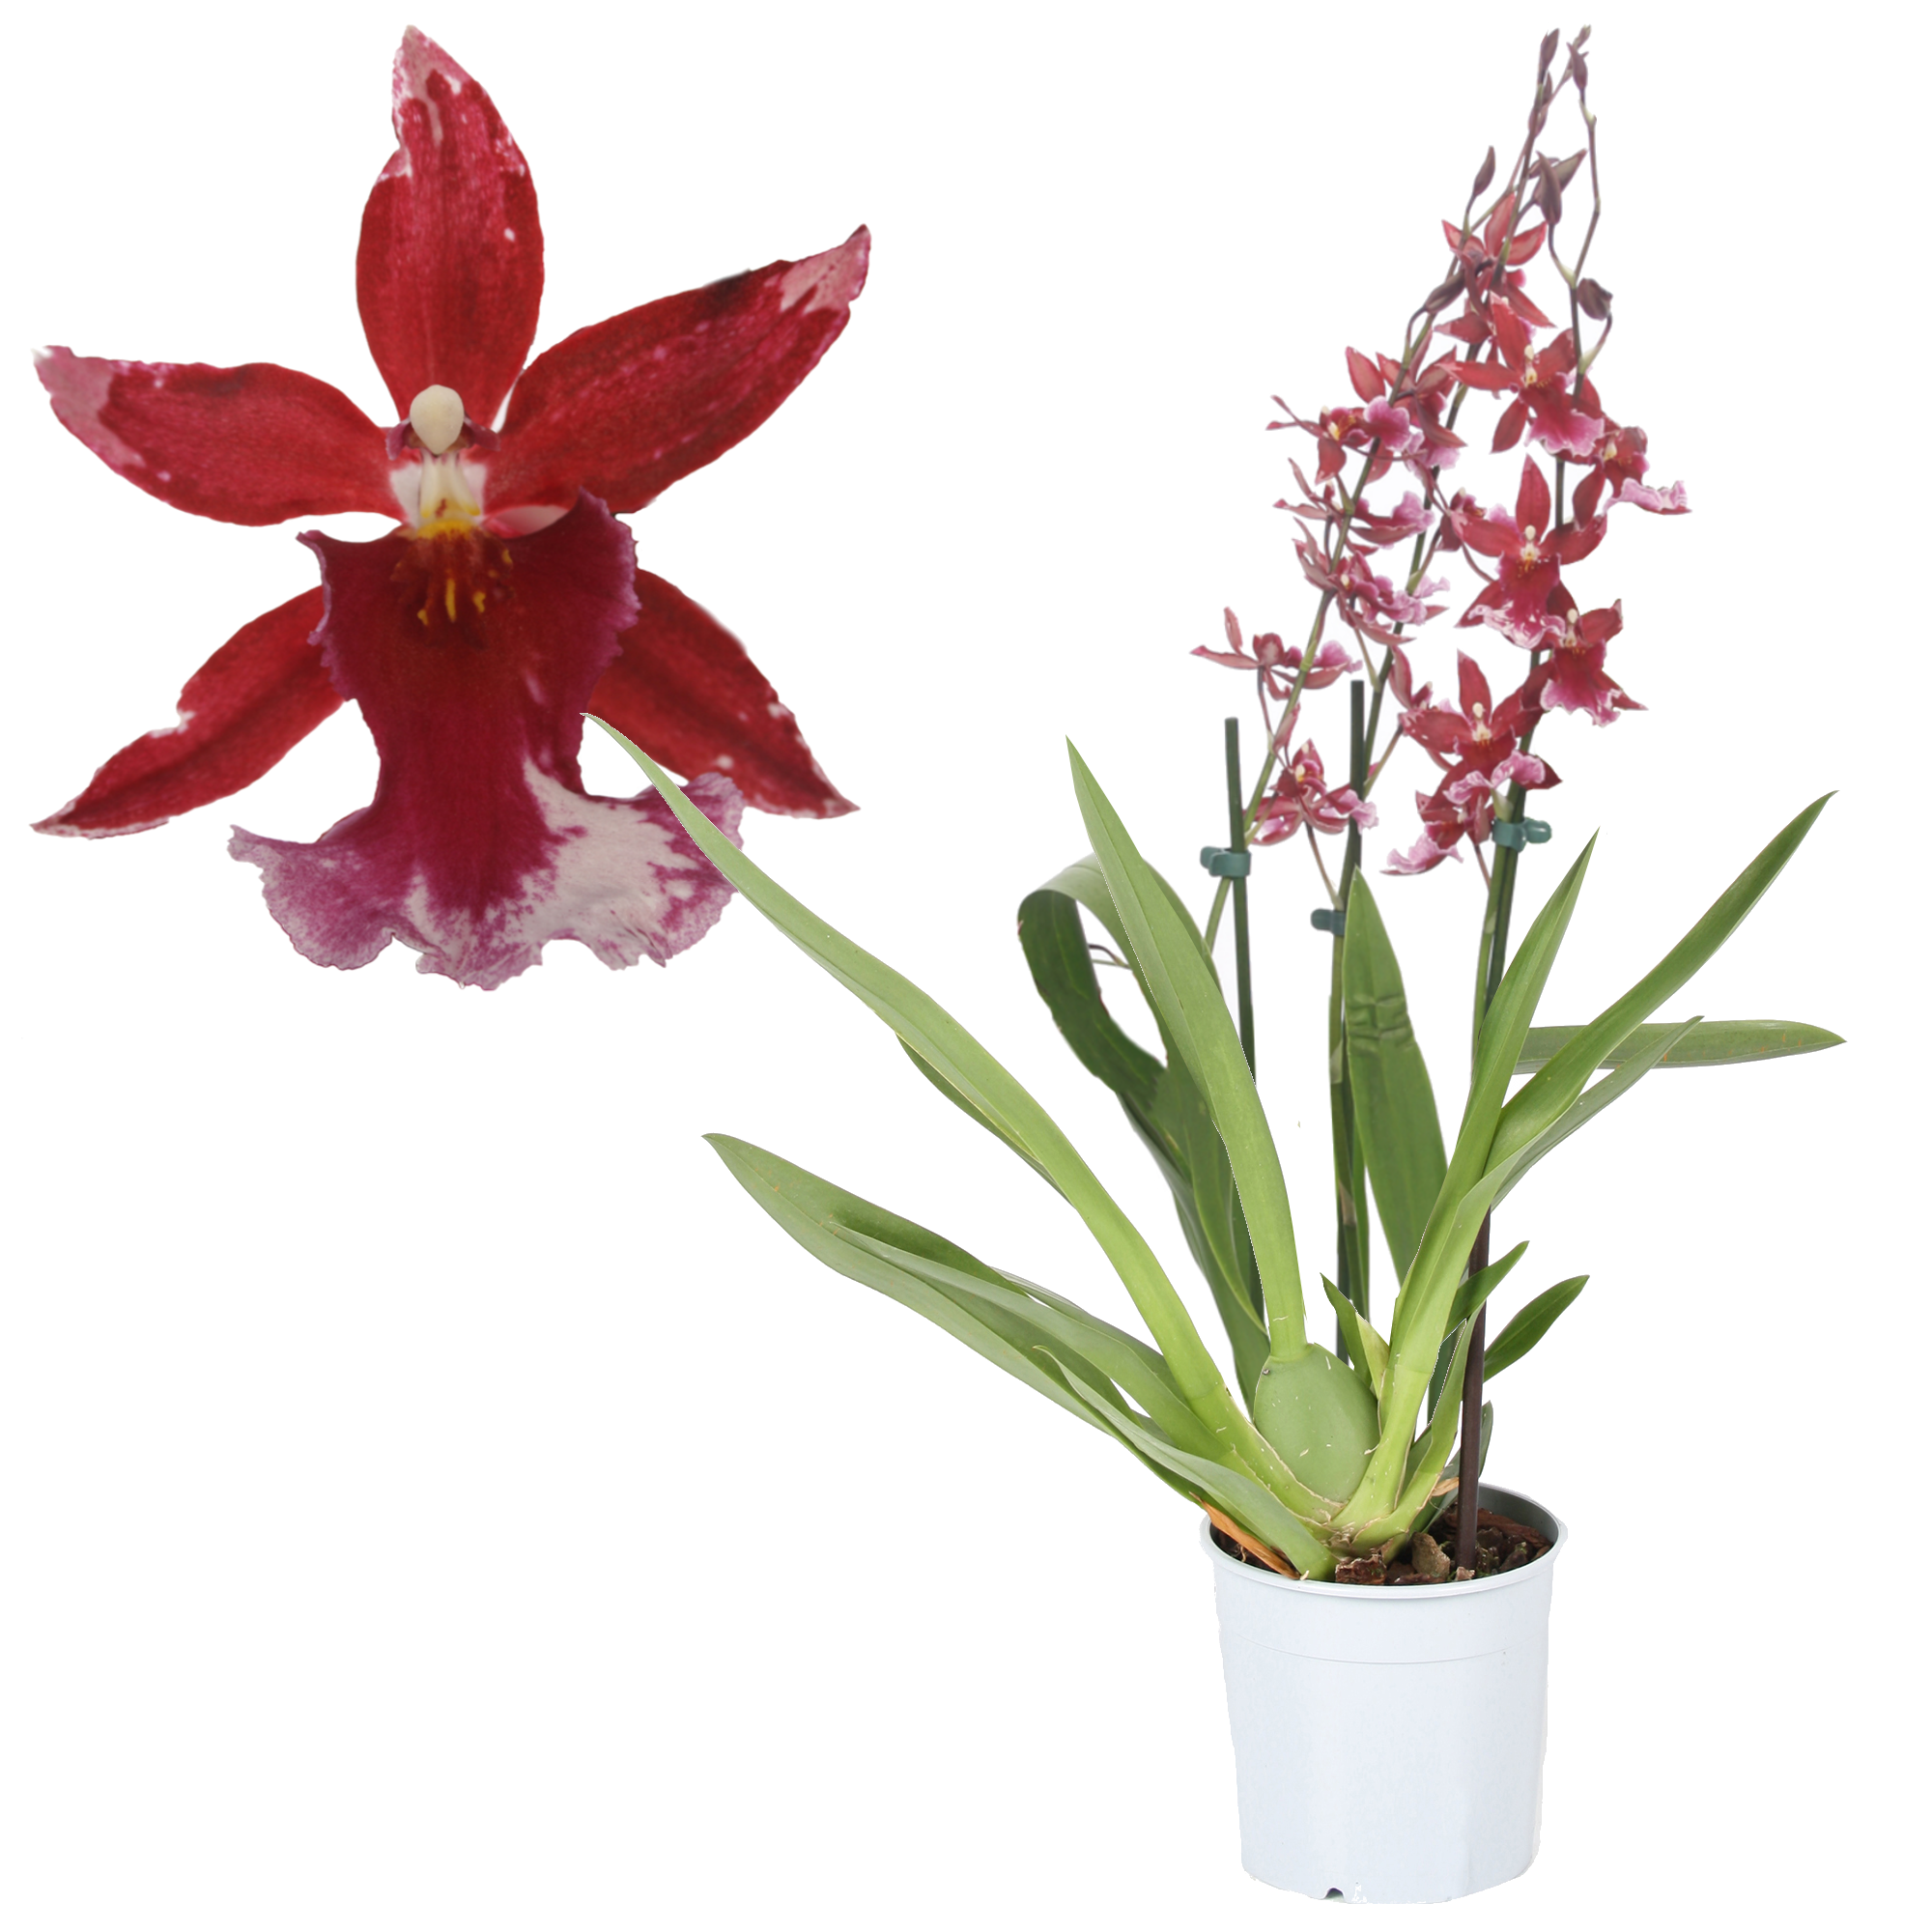 Cambria-Orchidee 'Barocco Red' 3 Rispen rot 12 cm Topf + product picture